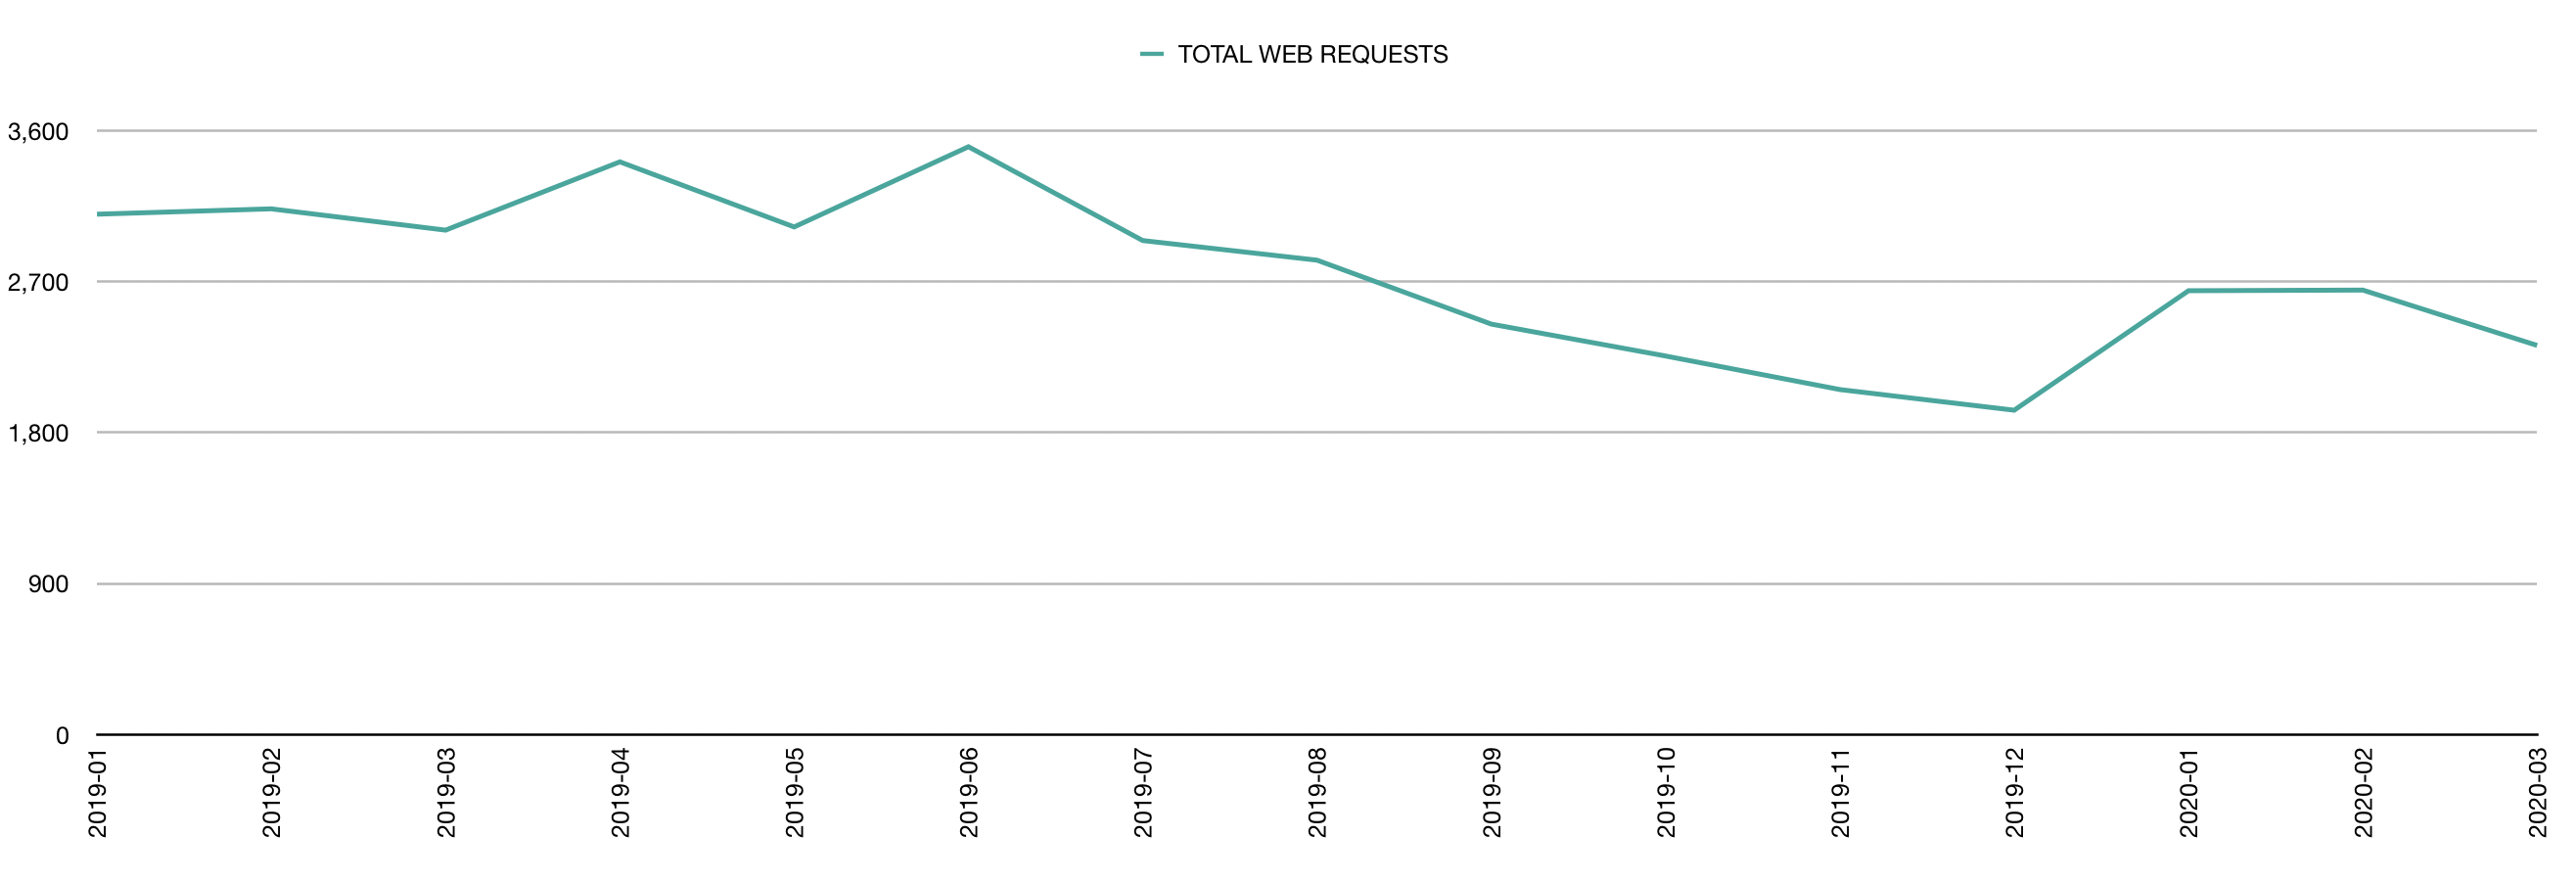 Total web requests graph